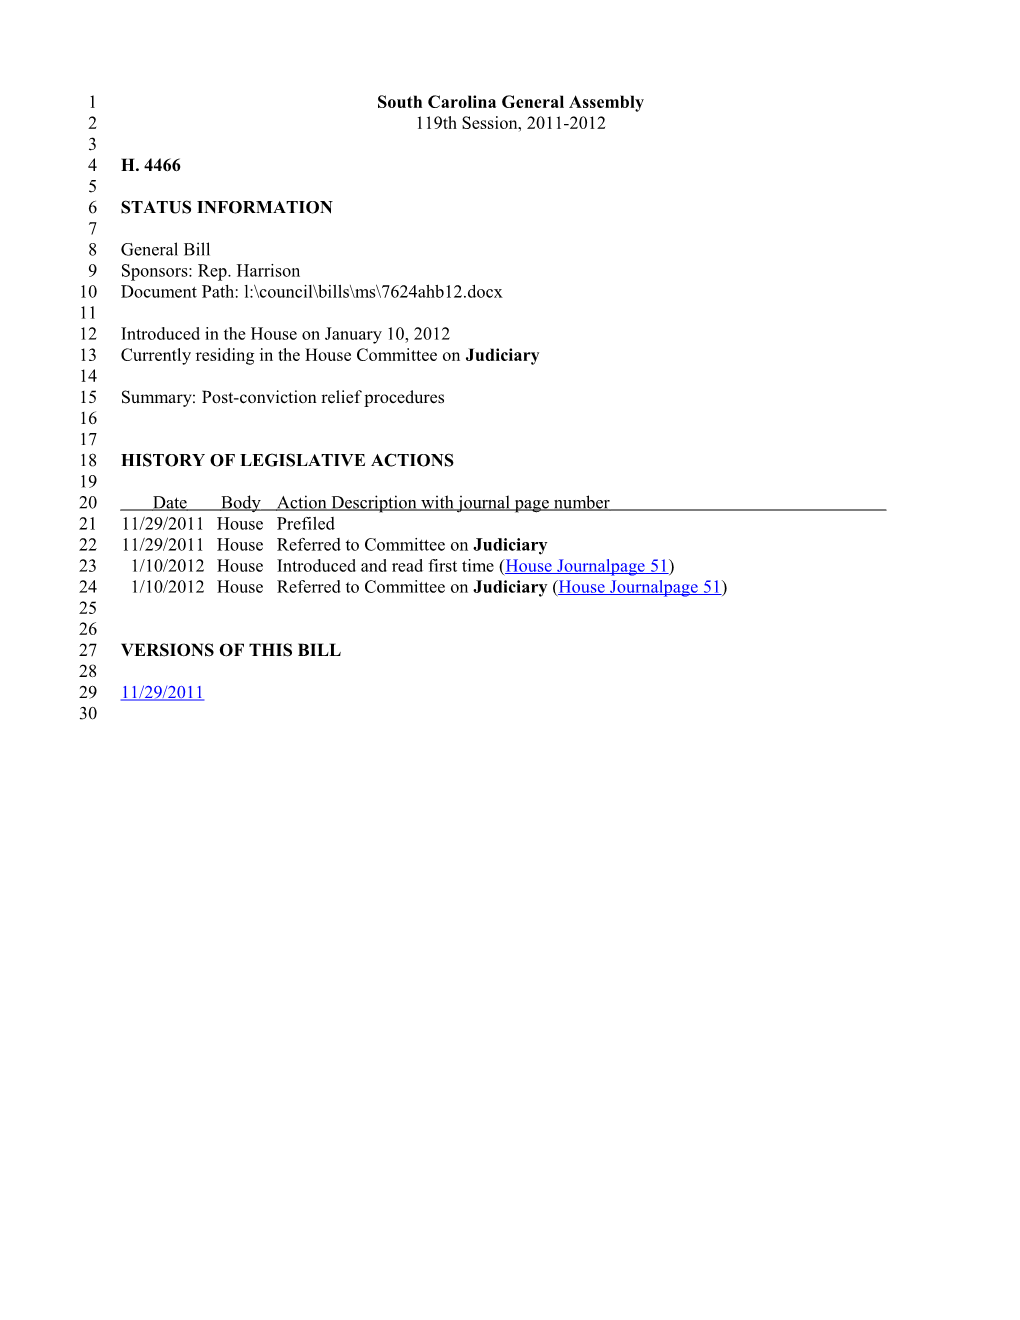 2011-2012 Bill 4466: Post-Conviction Relief Procedures - South Carolina Legislature Online